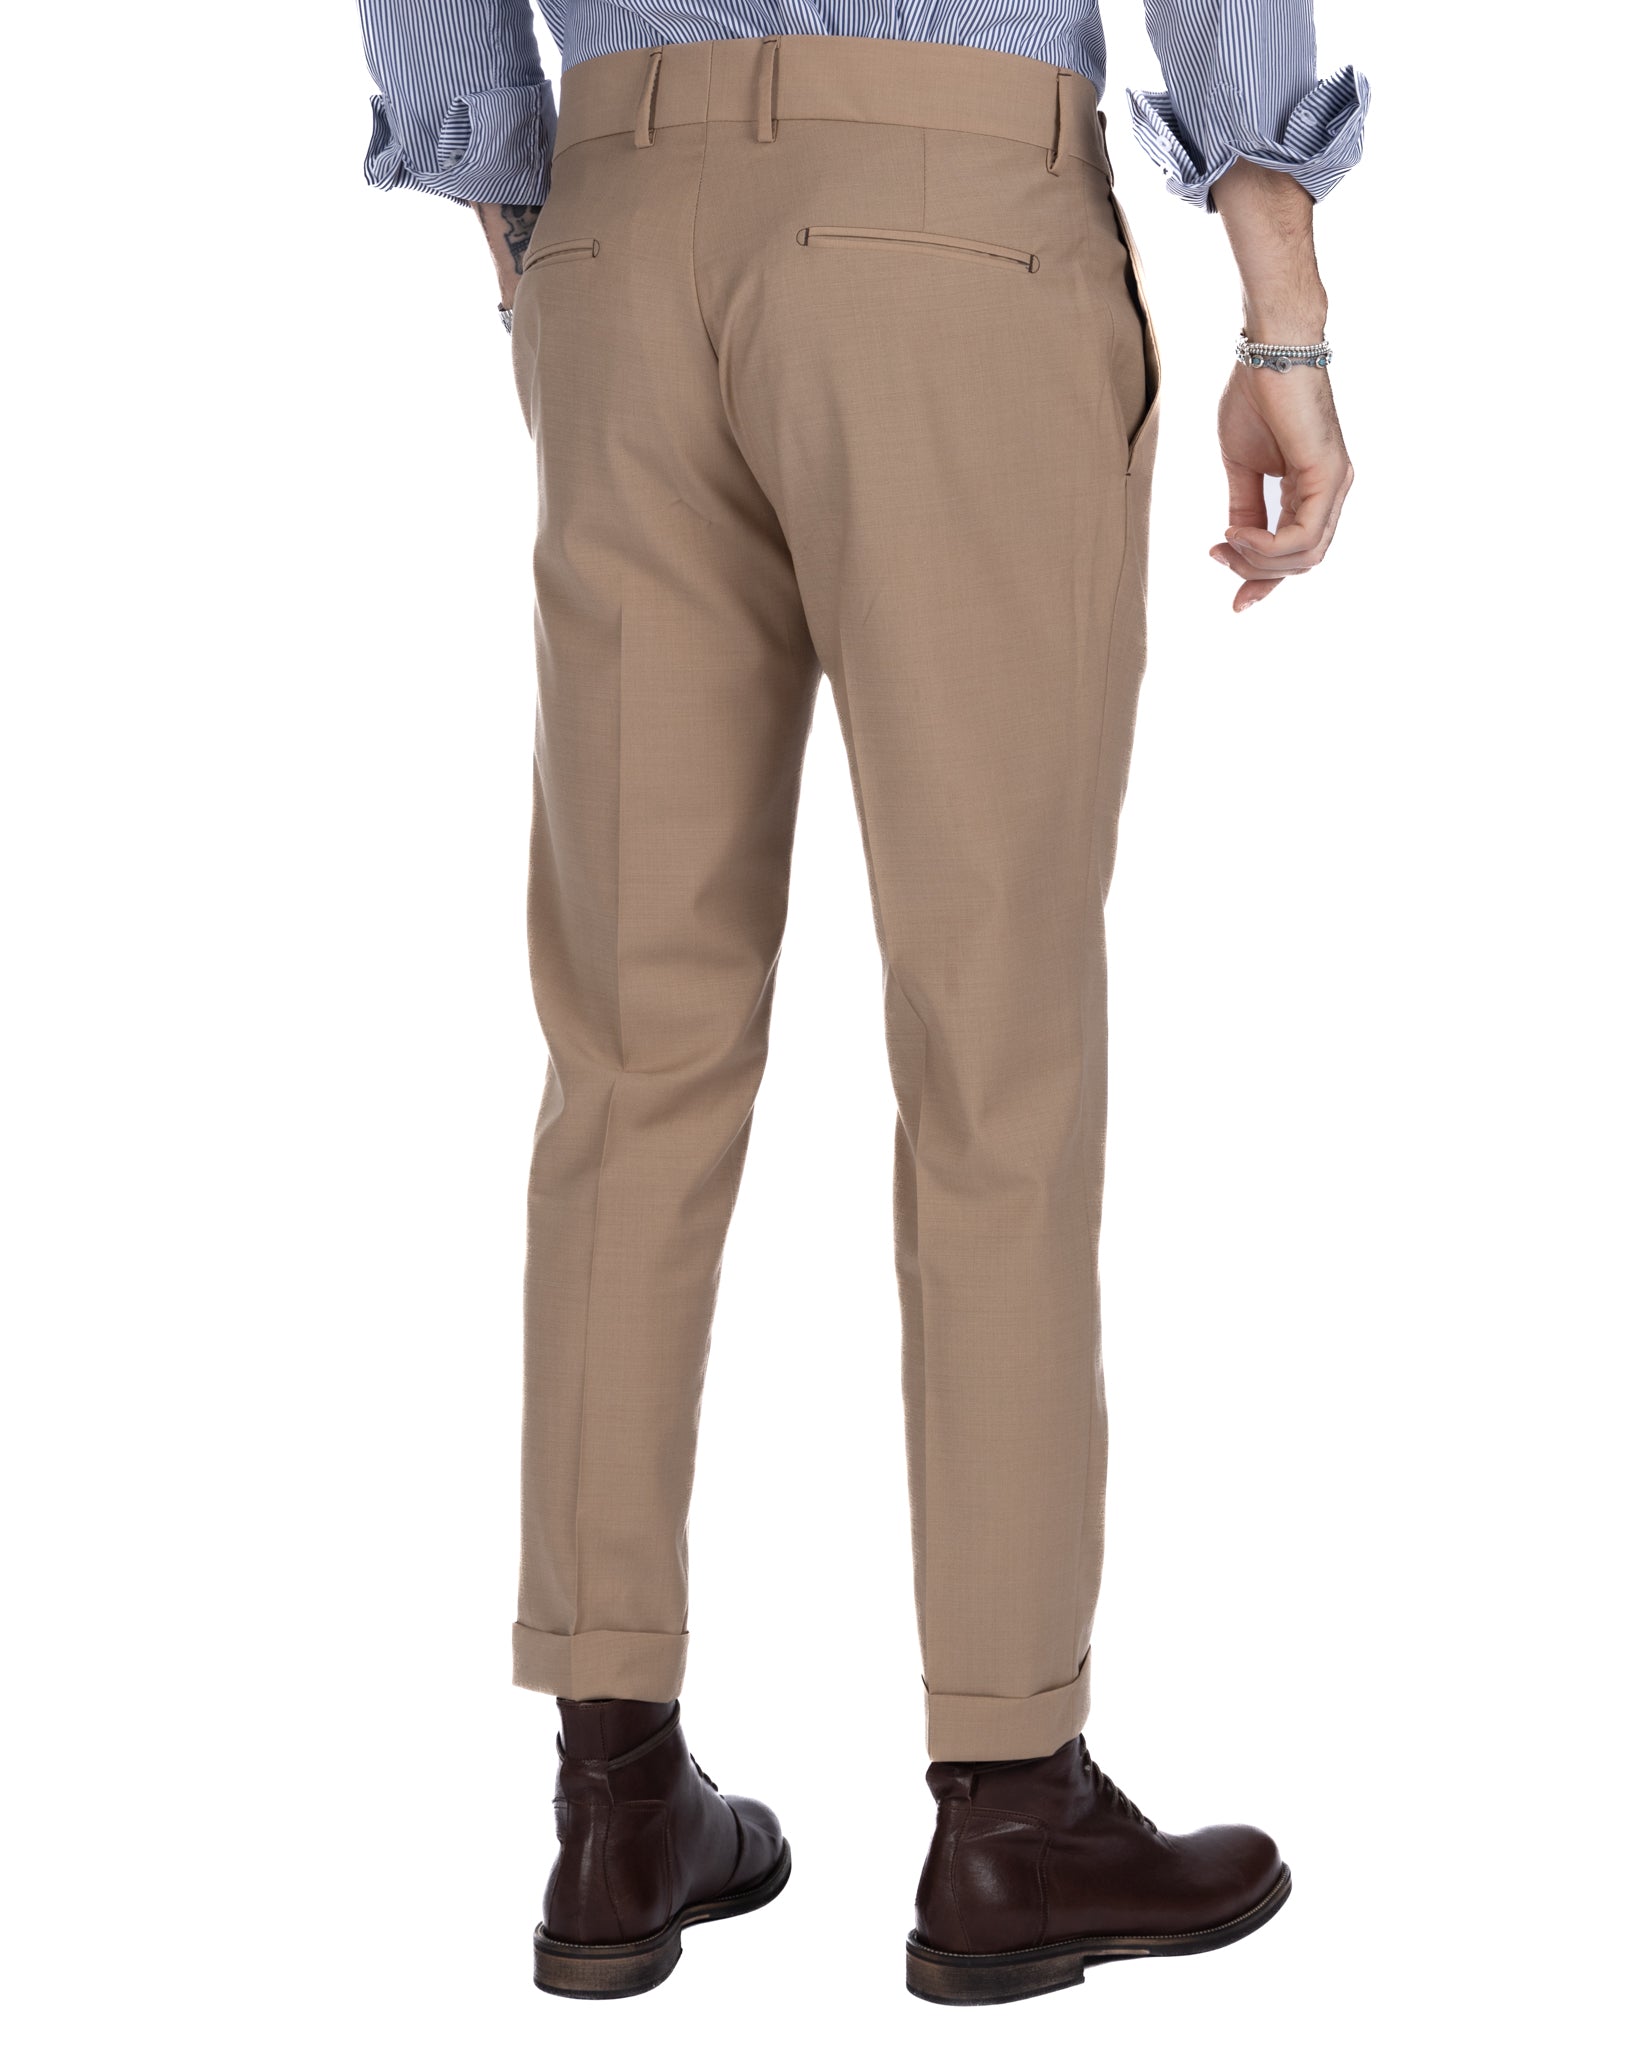 Italian - beige high-waisted trousers in wool blend